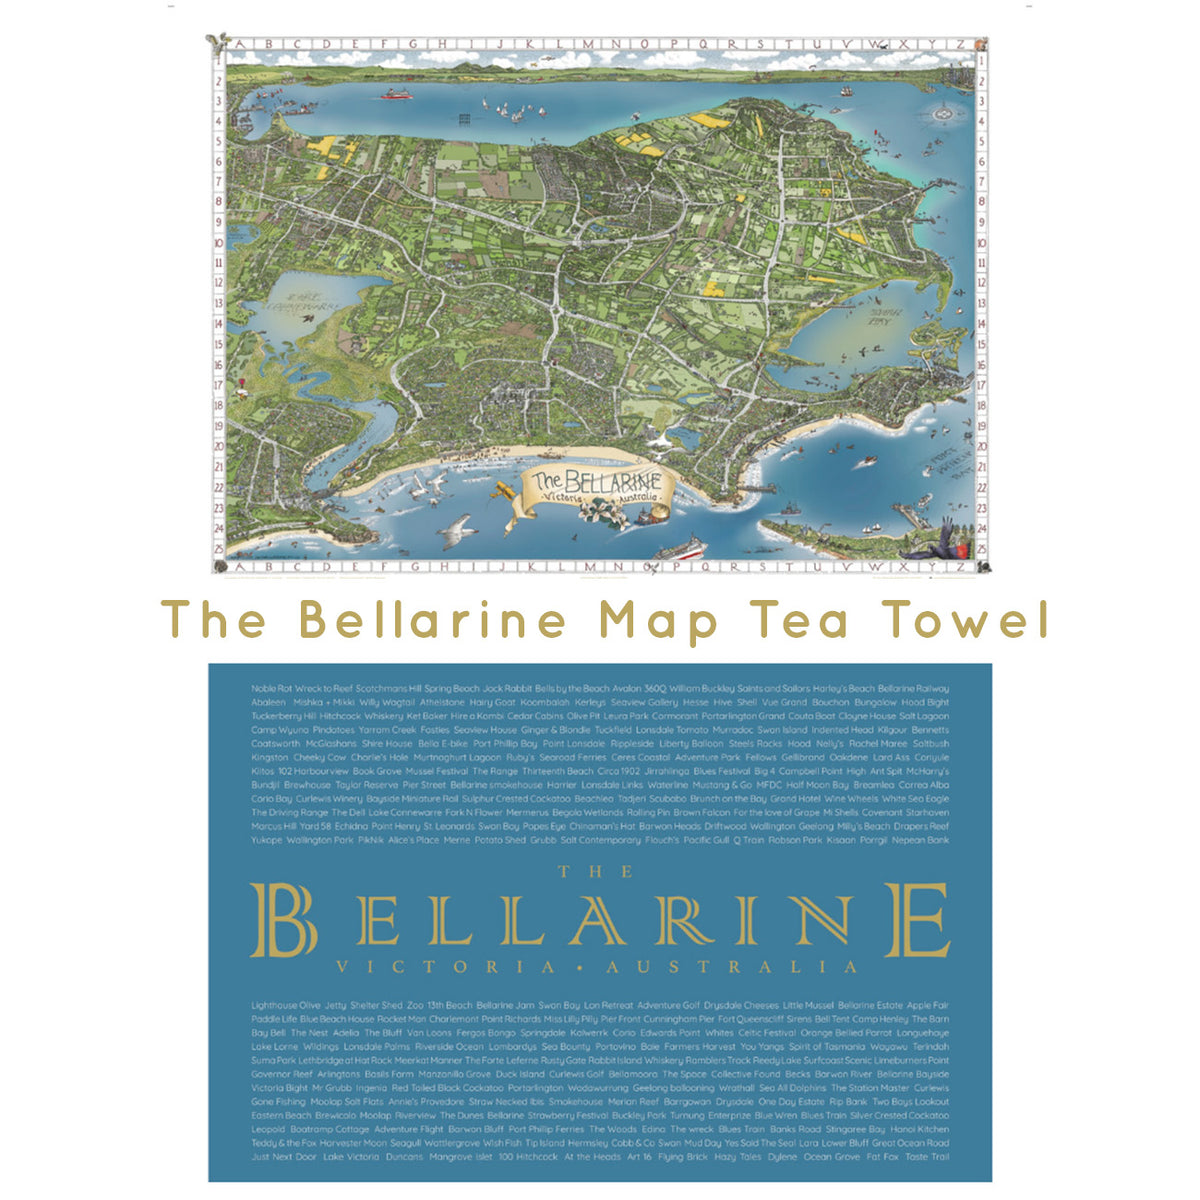 The Bellarine Map Tea Towel